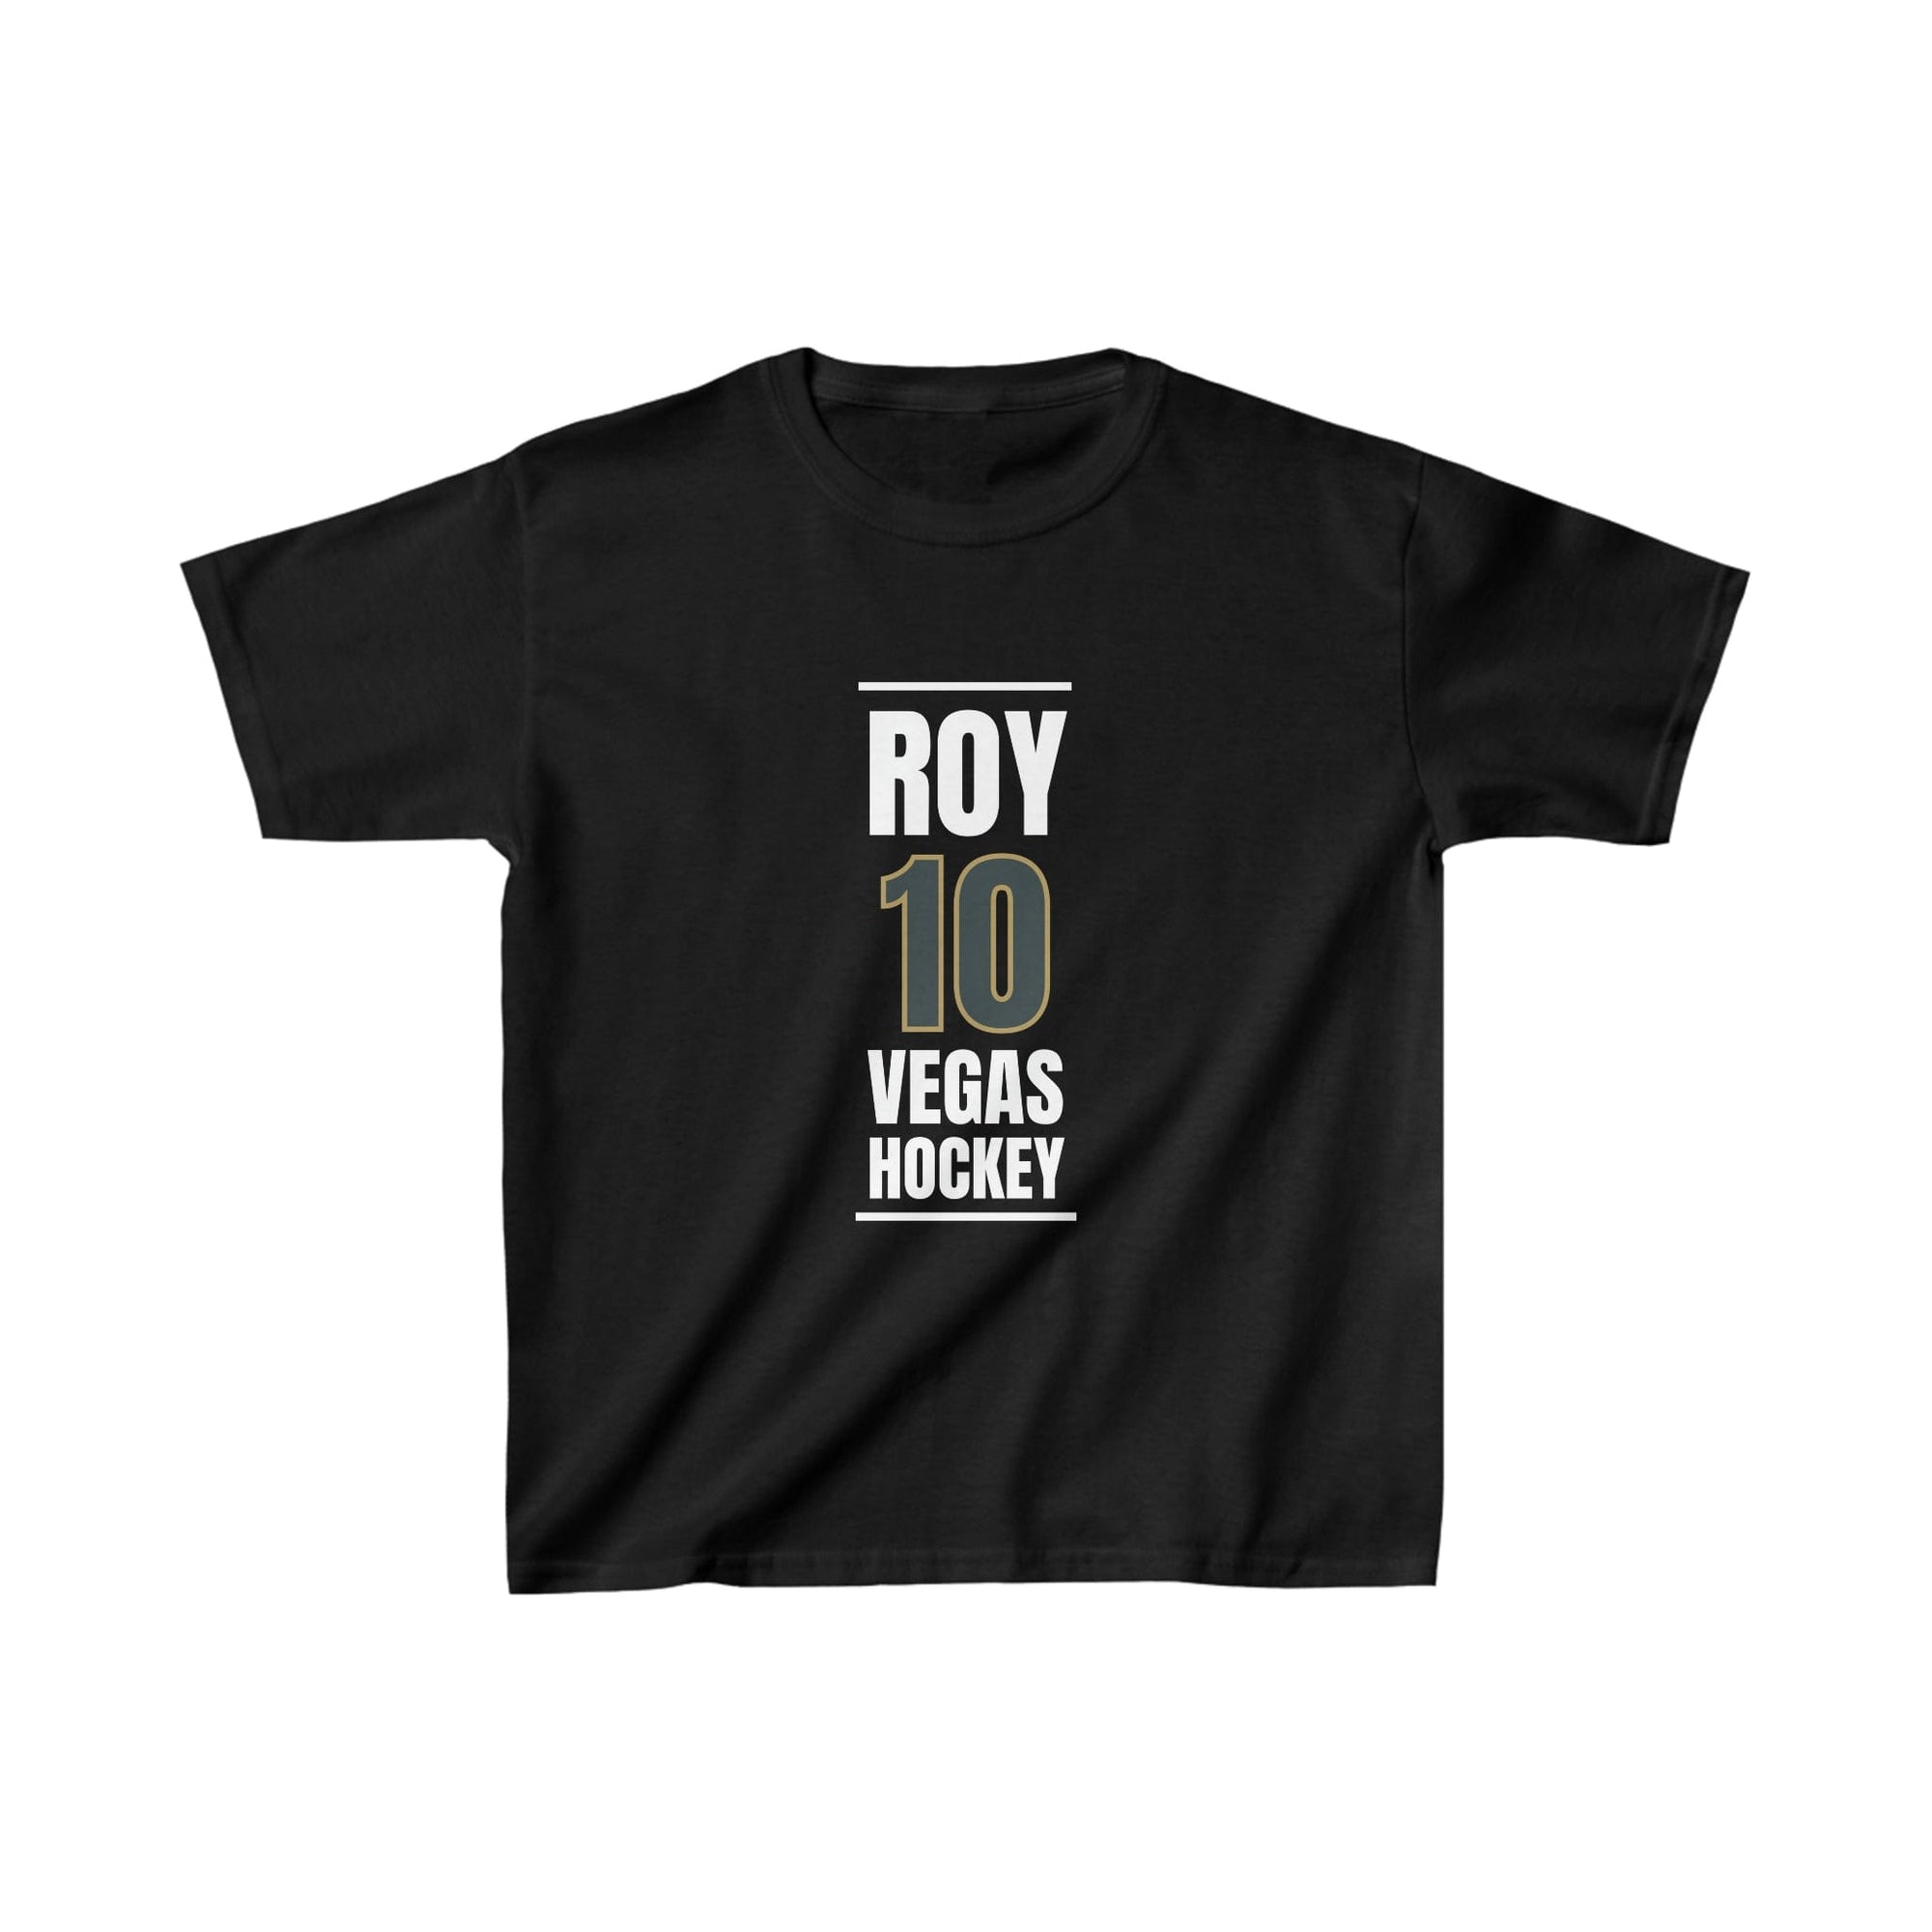 Kids clothes Roy 10 Vegas Hockey Steel Gray Vertical Design Kids Tee